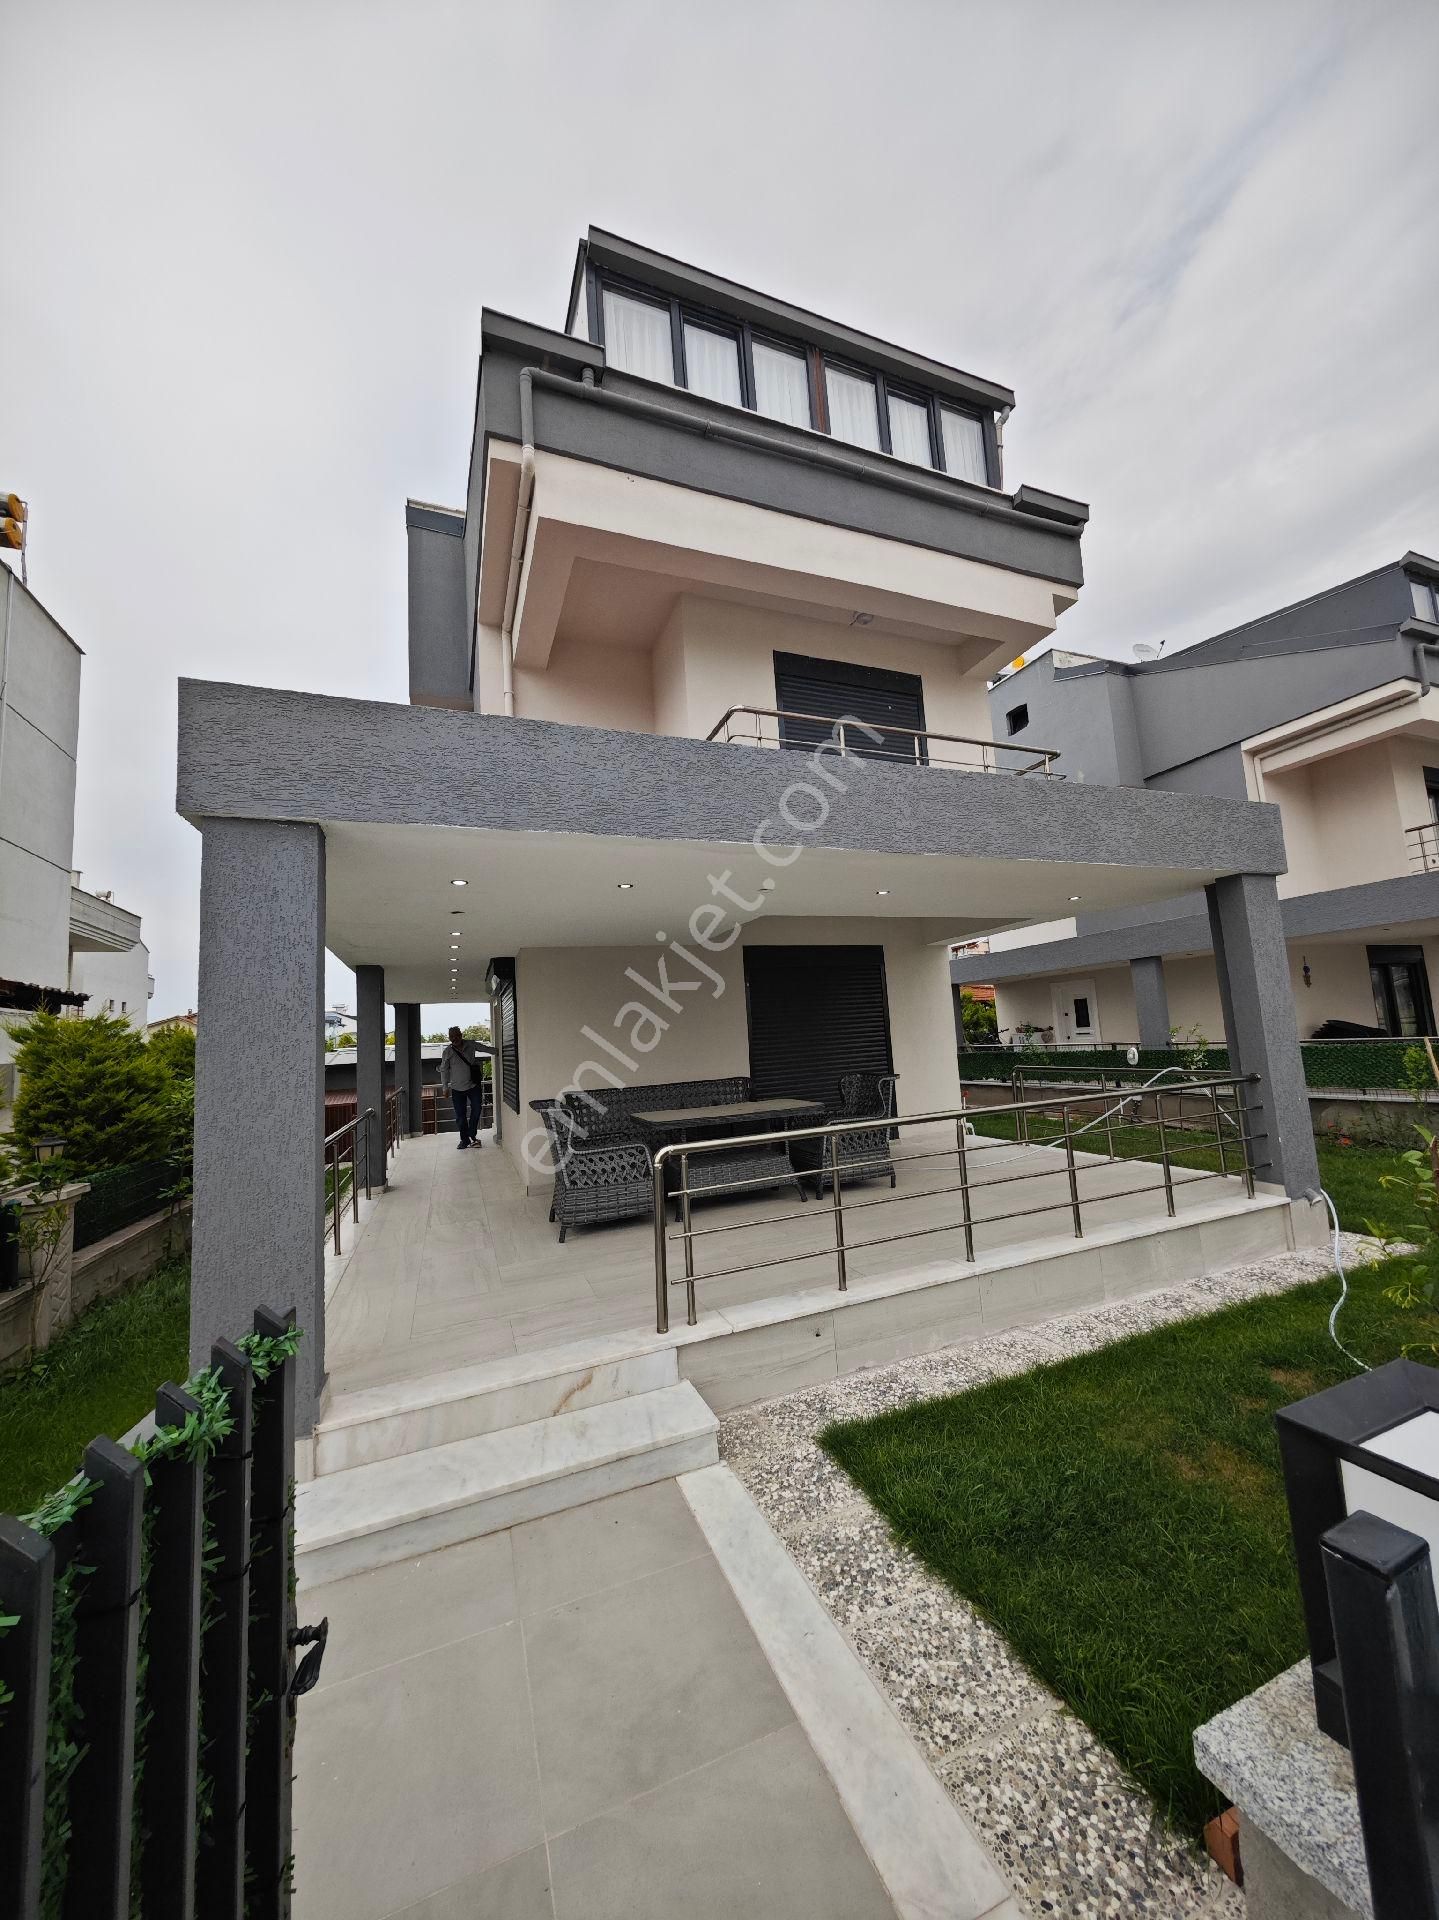 Dikili Cumhuriyet Satılık Villa DİKİLİ ÜMMETOĞLU'NDAN 4+1 TEK'NİZAM ULTRA LÜKS TRİPLEKS 200 m2 BAHÇELİ VİLLA